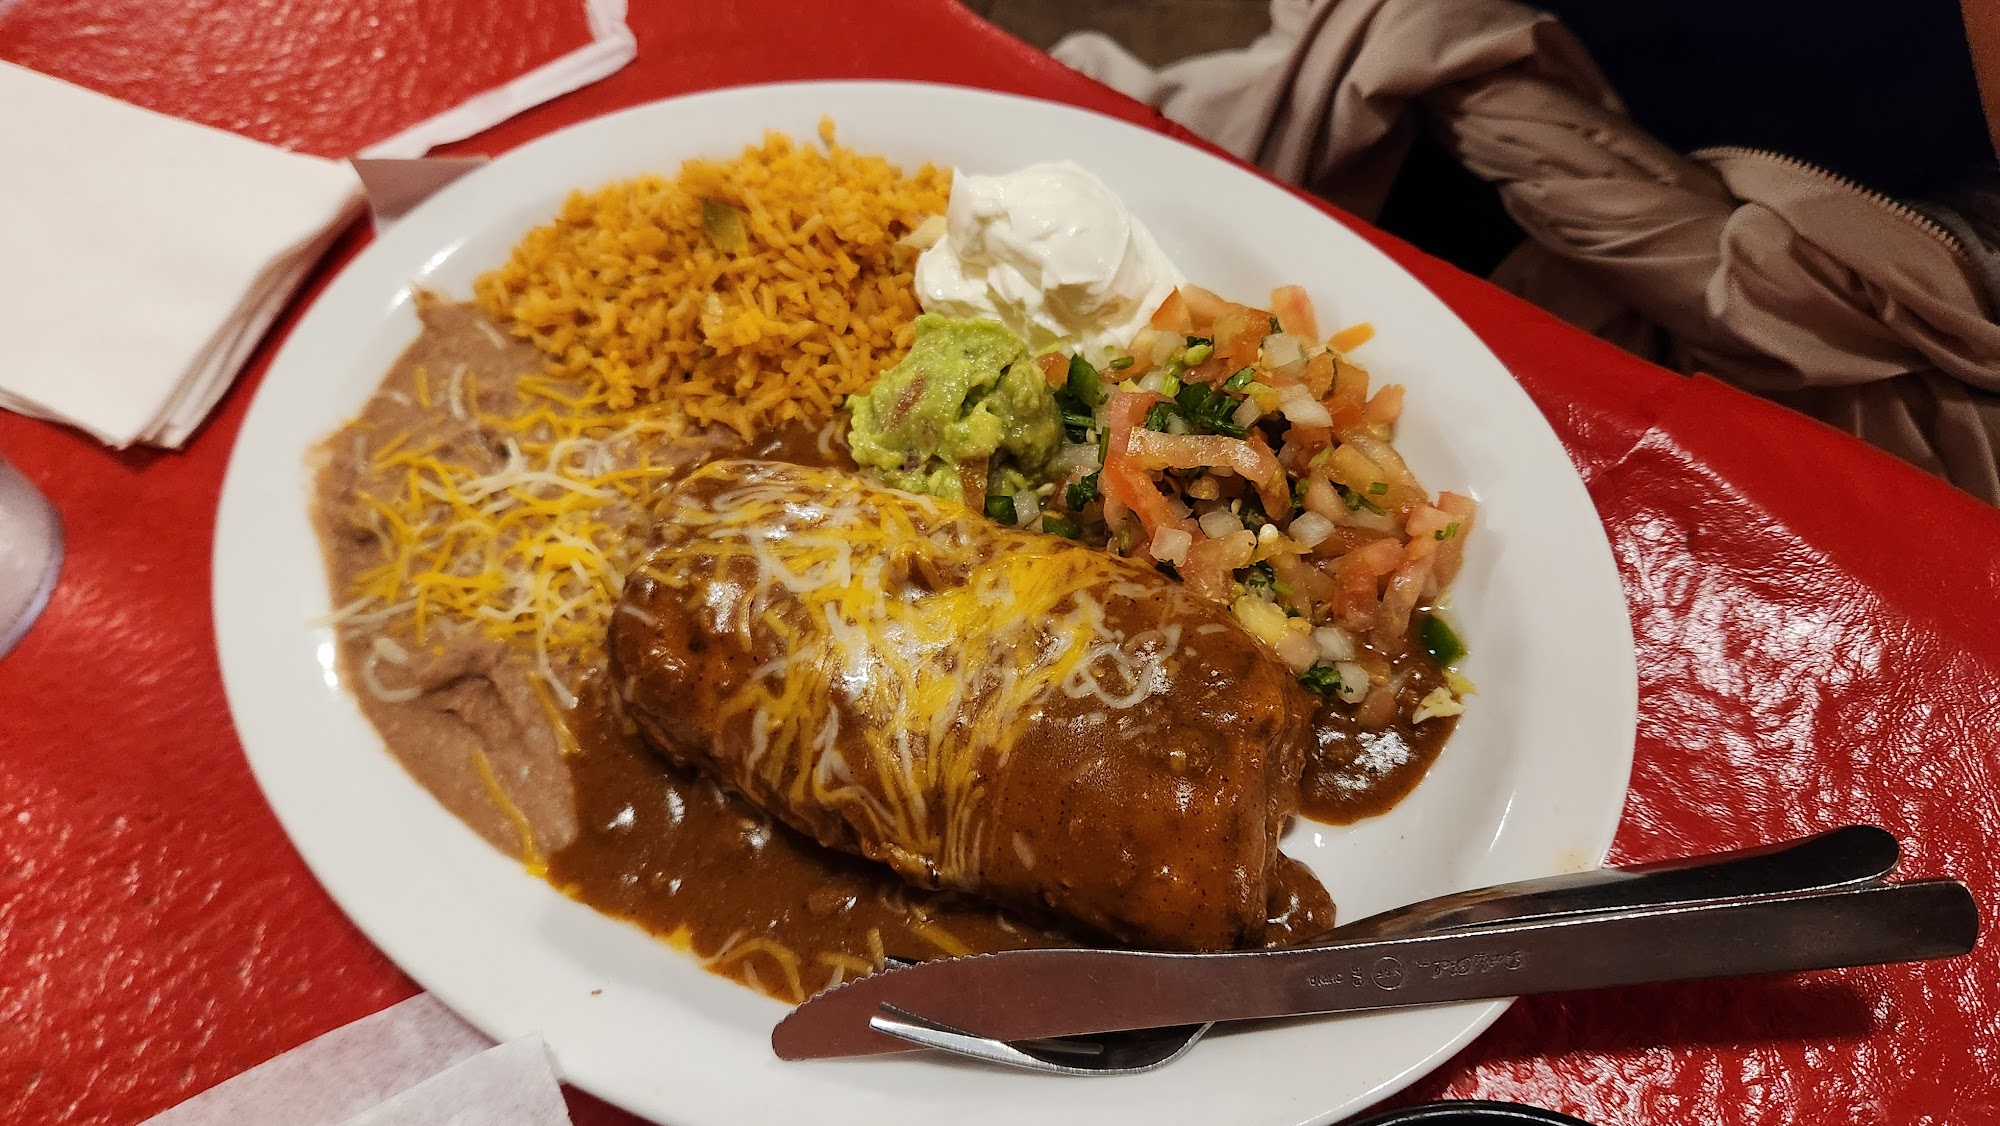 Tele's Mexican Restaurant